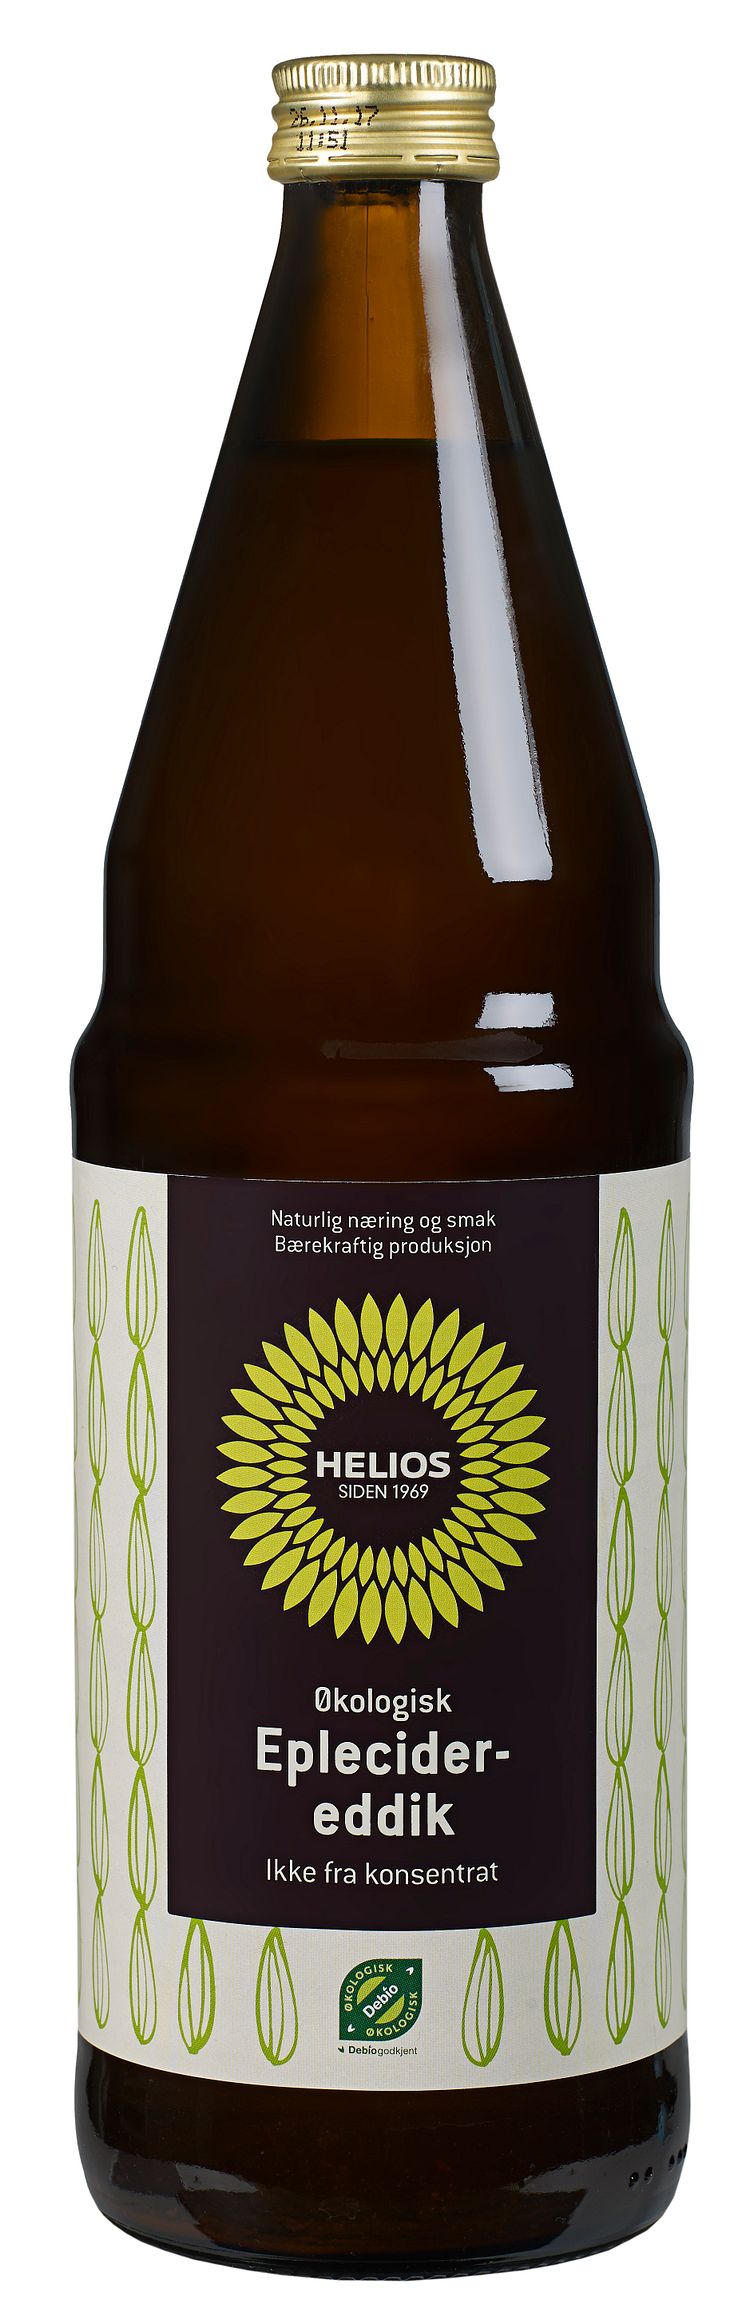 Helios epleeddik ren økologisk demeter 0,75 l